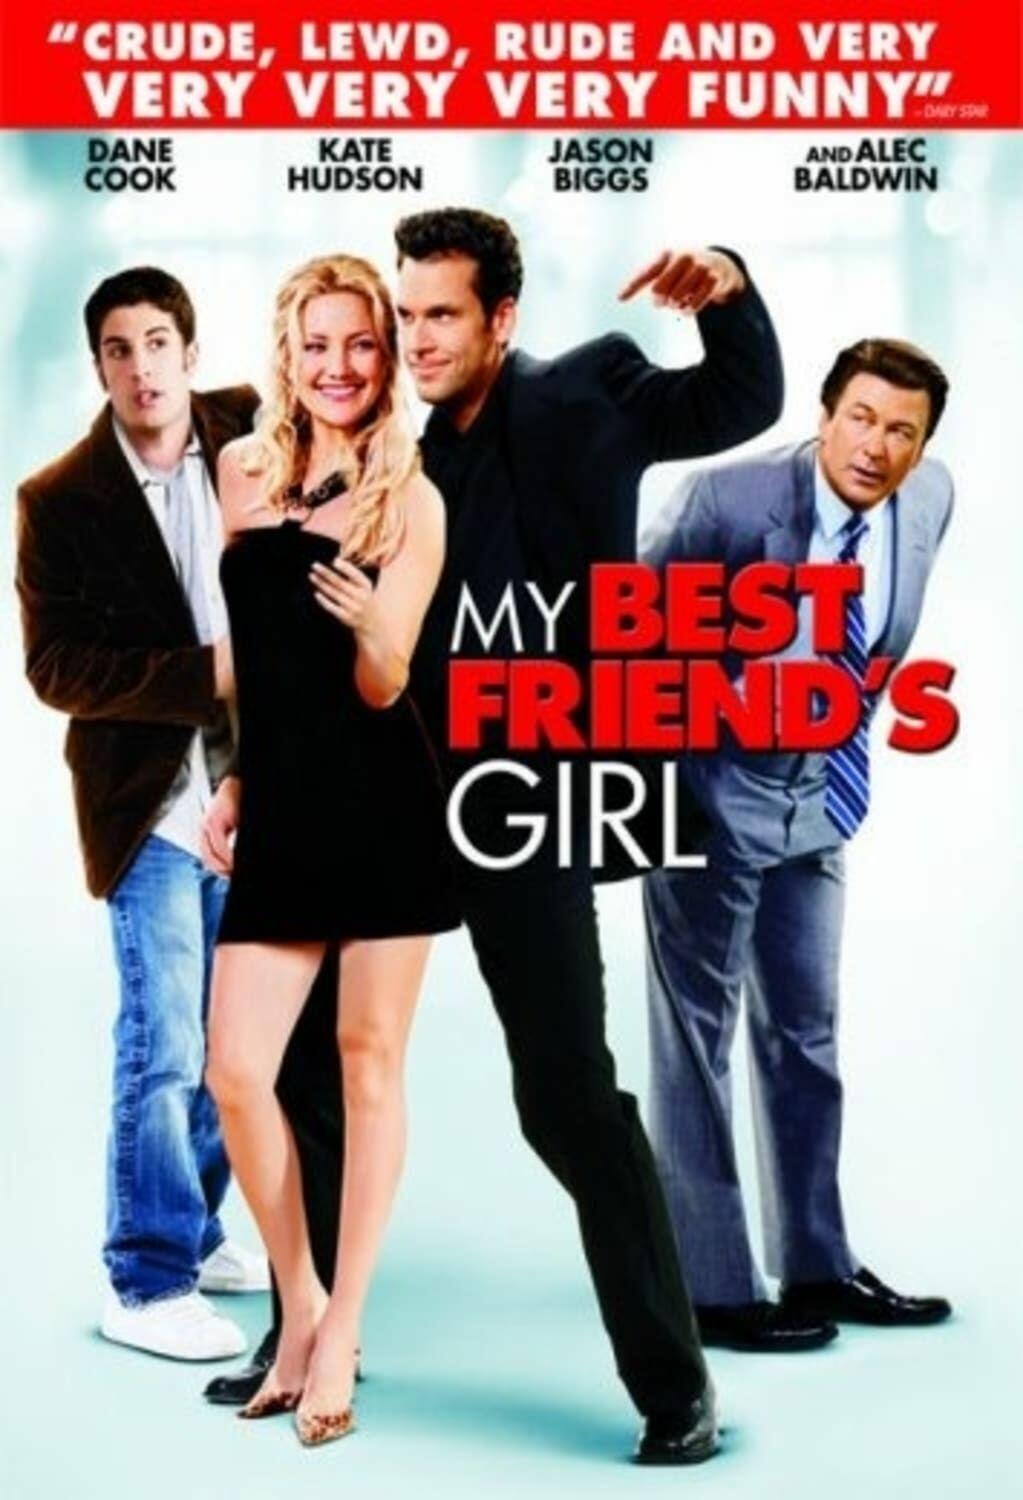 My Best Friend’s Girl (DVD) on MovieShack